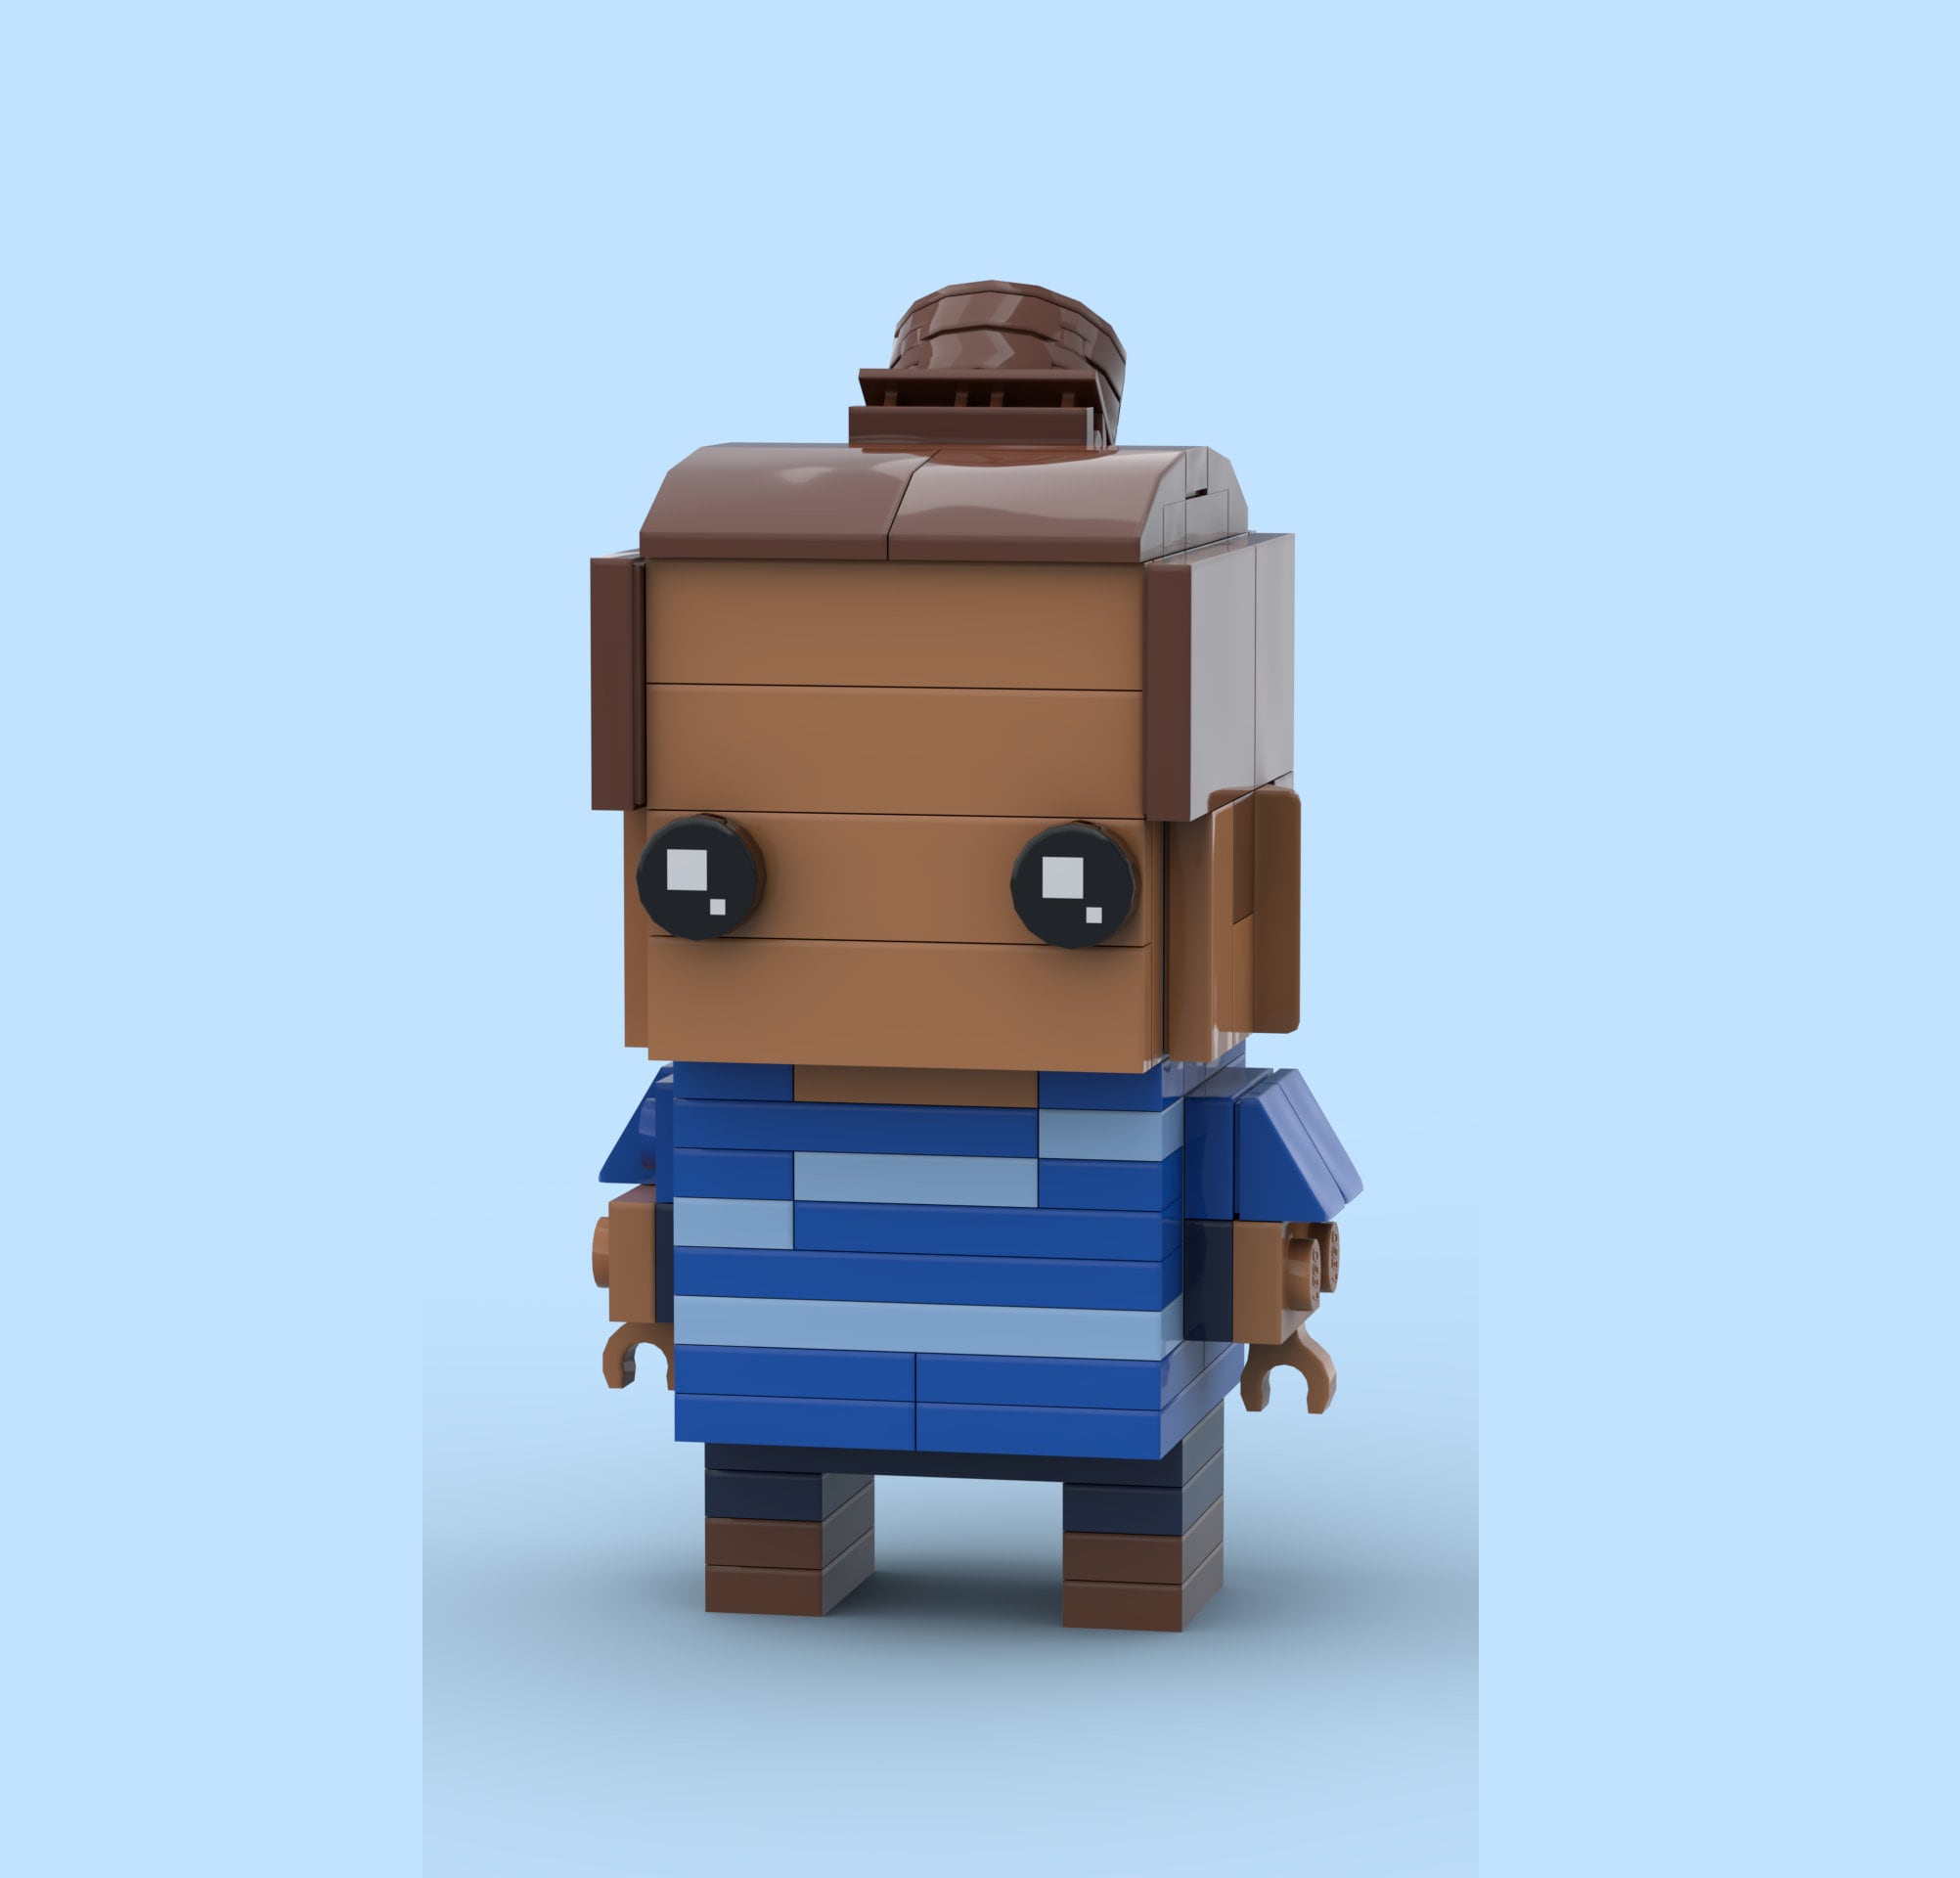 Lego Avatar the Last Airbender Custom Brickheadz Figures: Aang